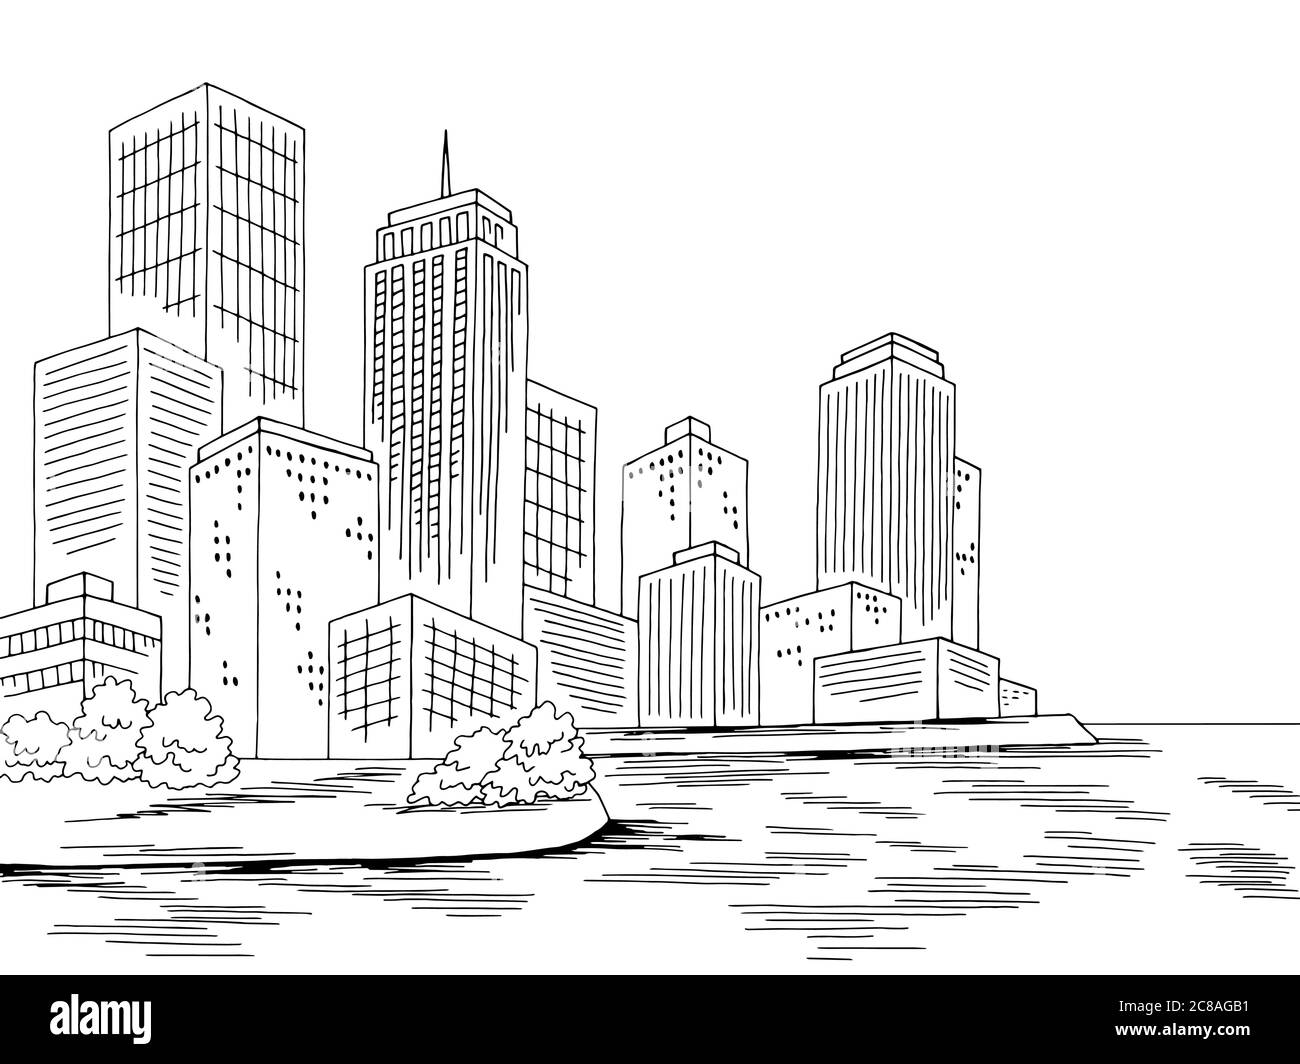 Stadt Meer Ufer Grafik schwarz weiß Stadtbild Skyline Skizze Illustration Vektor Stock Vektor